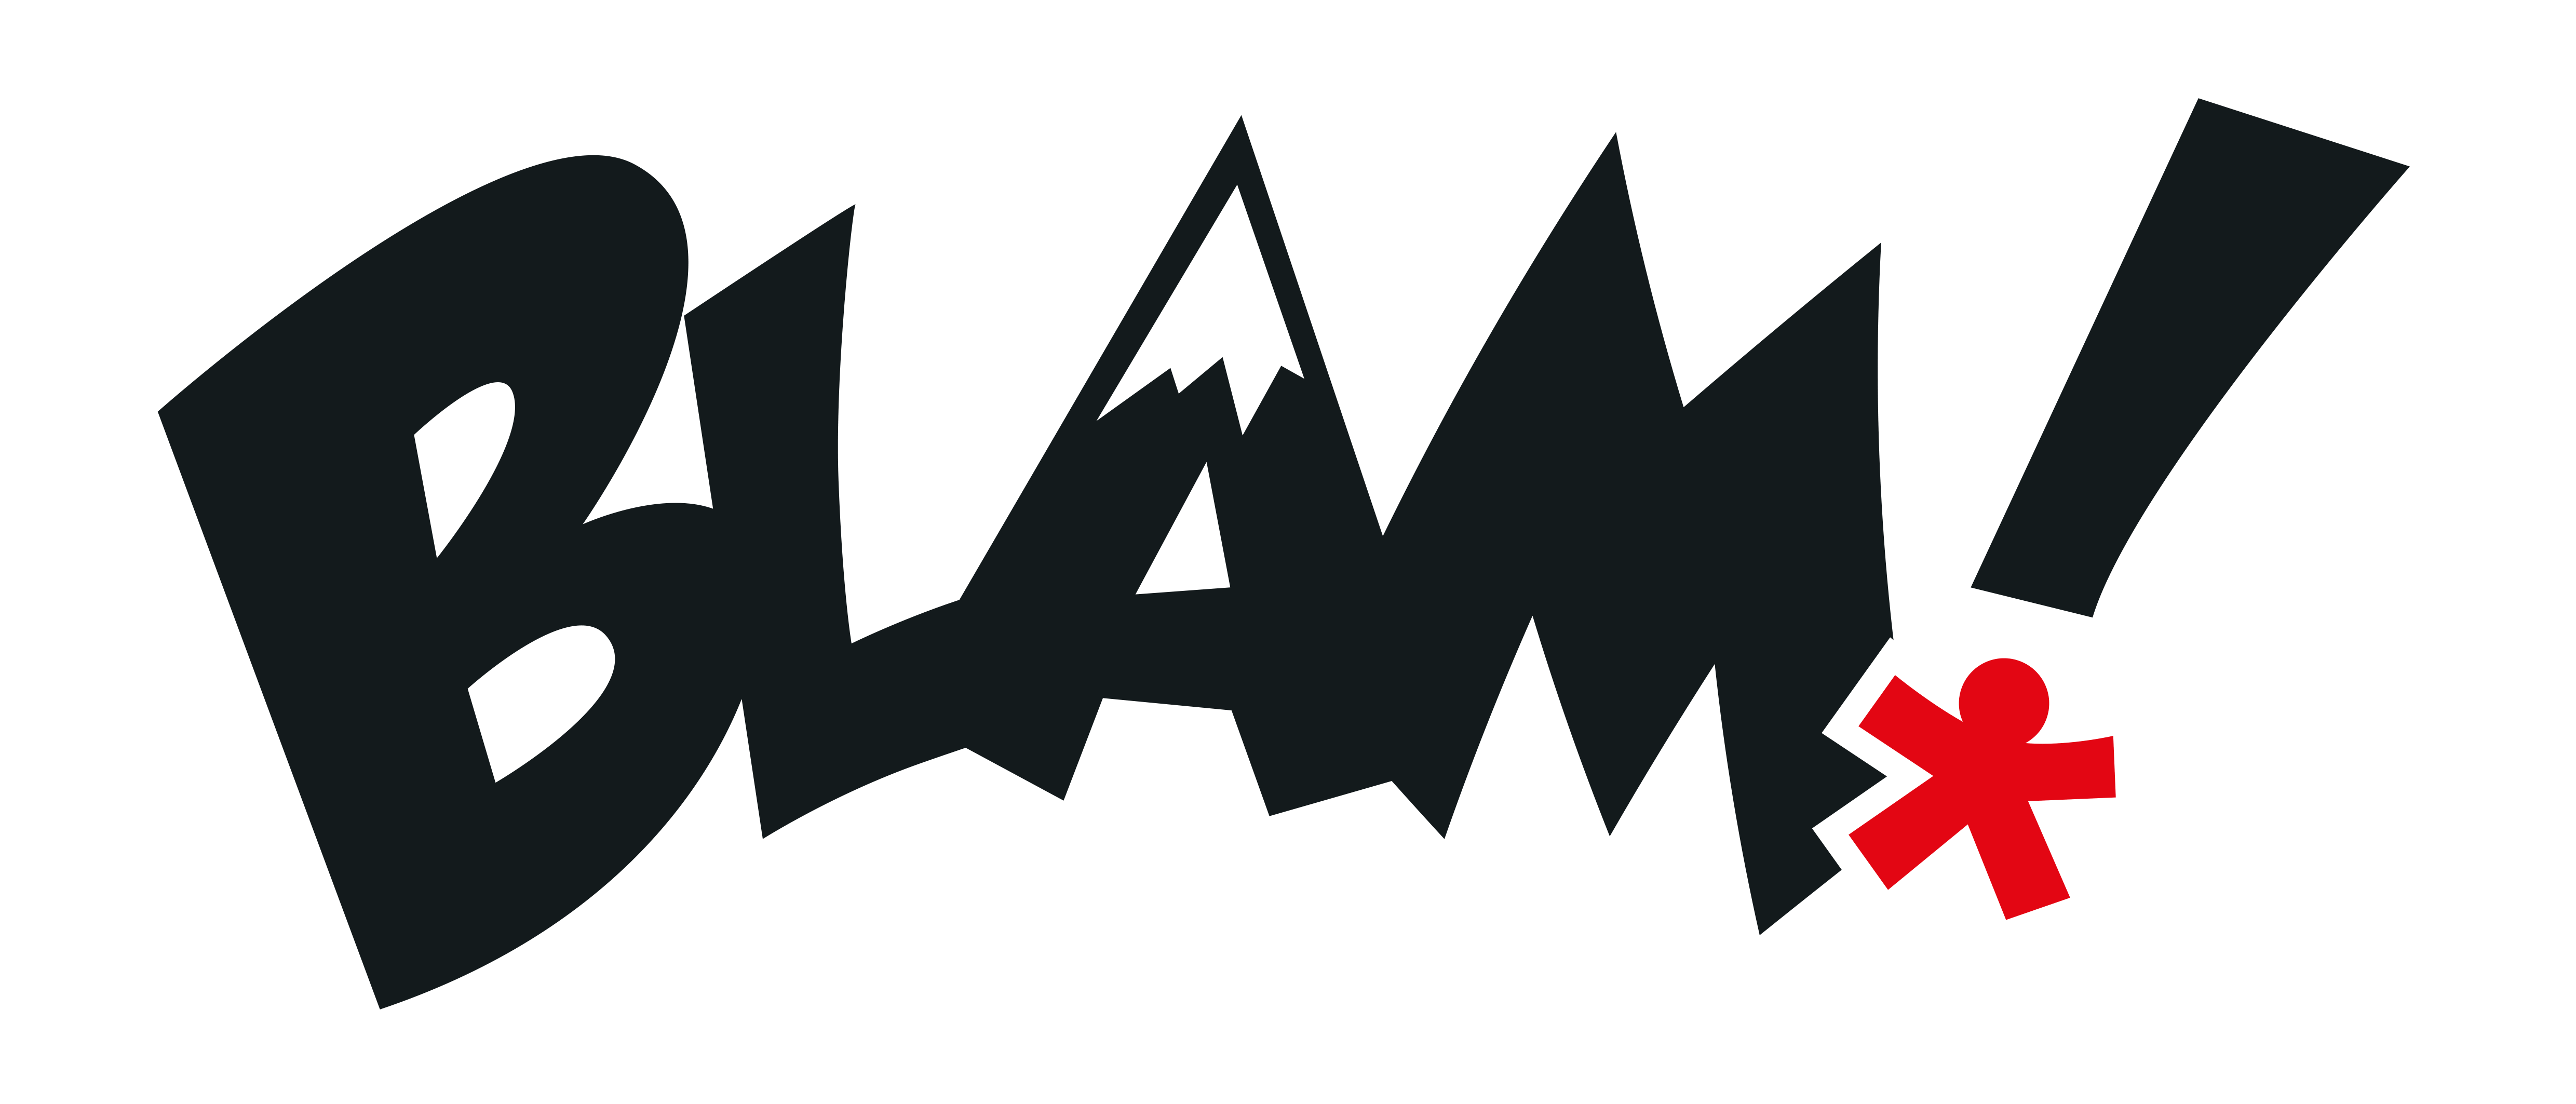 blam logo